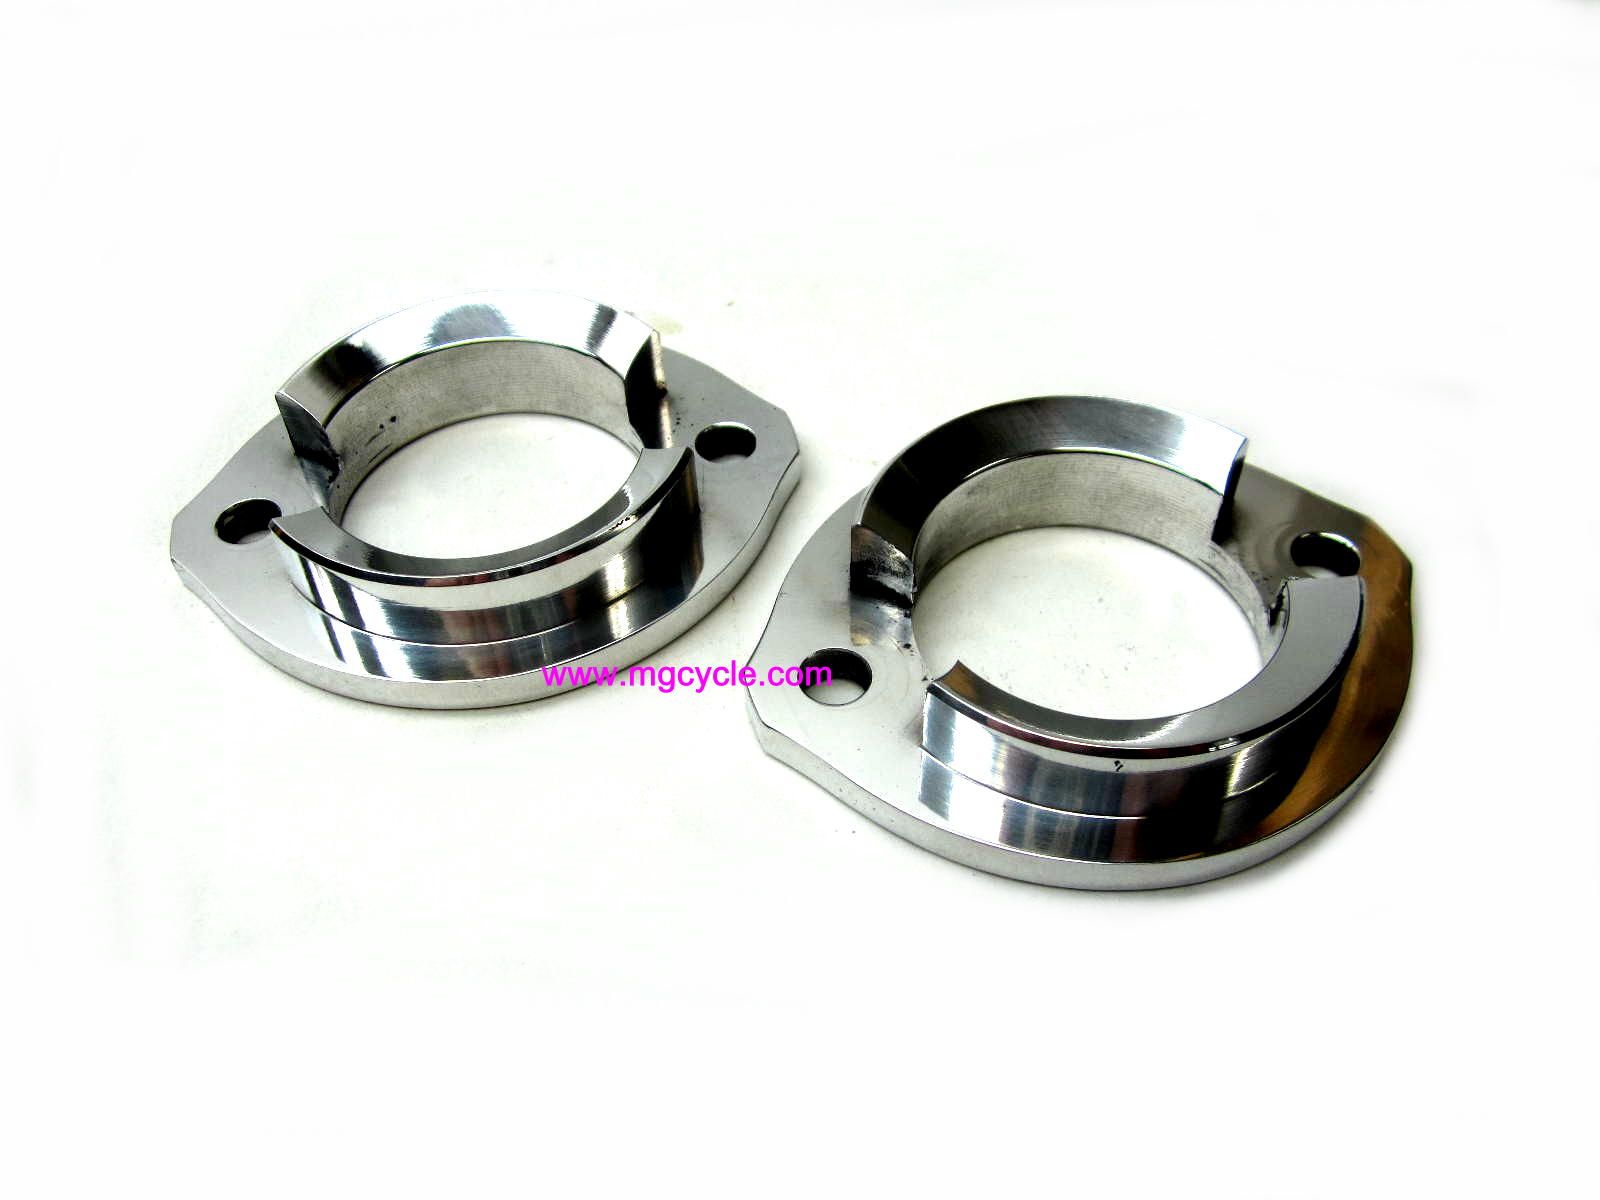 CNC aluminum exhaust flange pair, 45mm